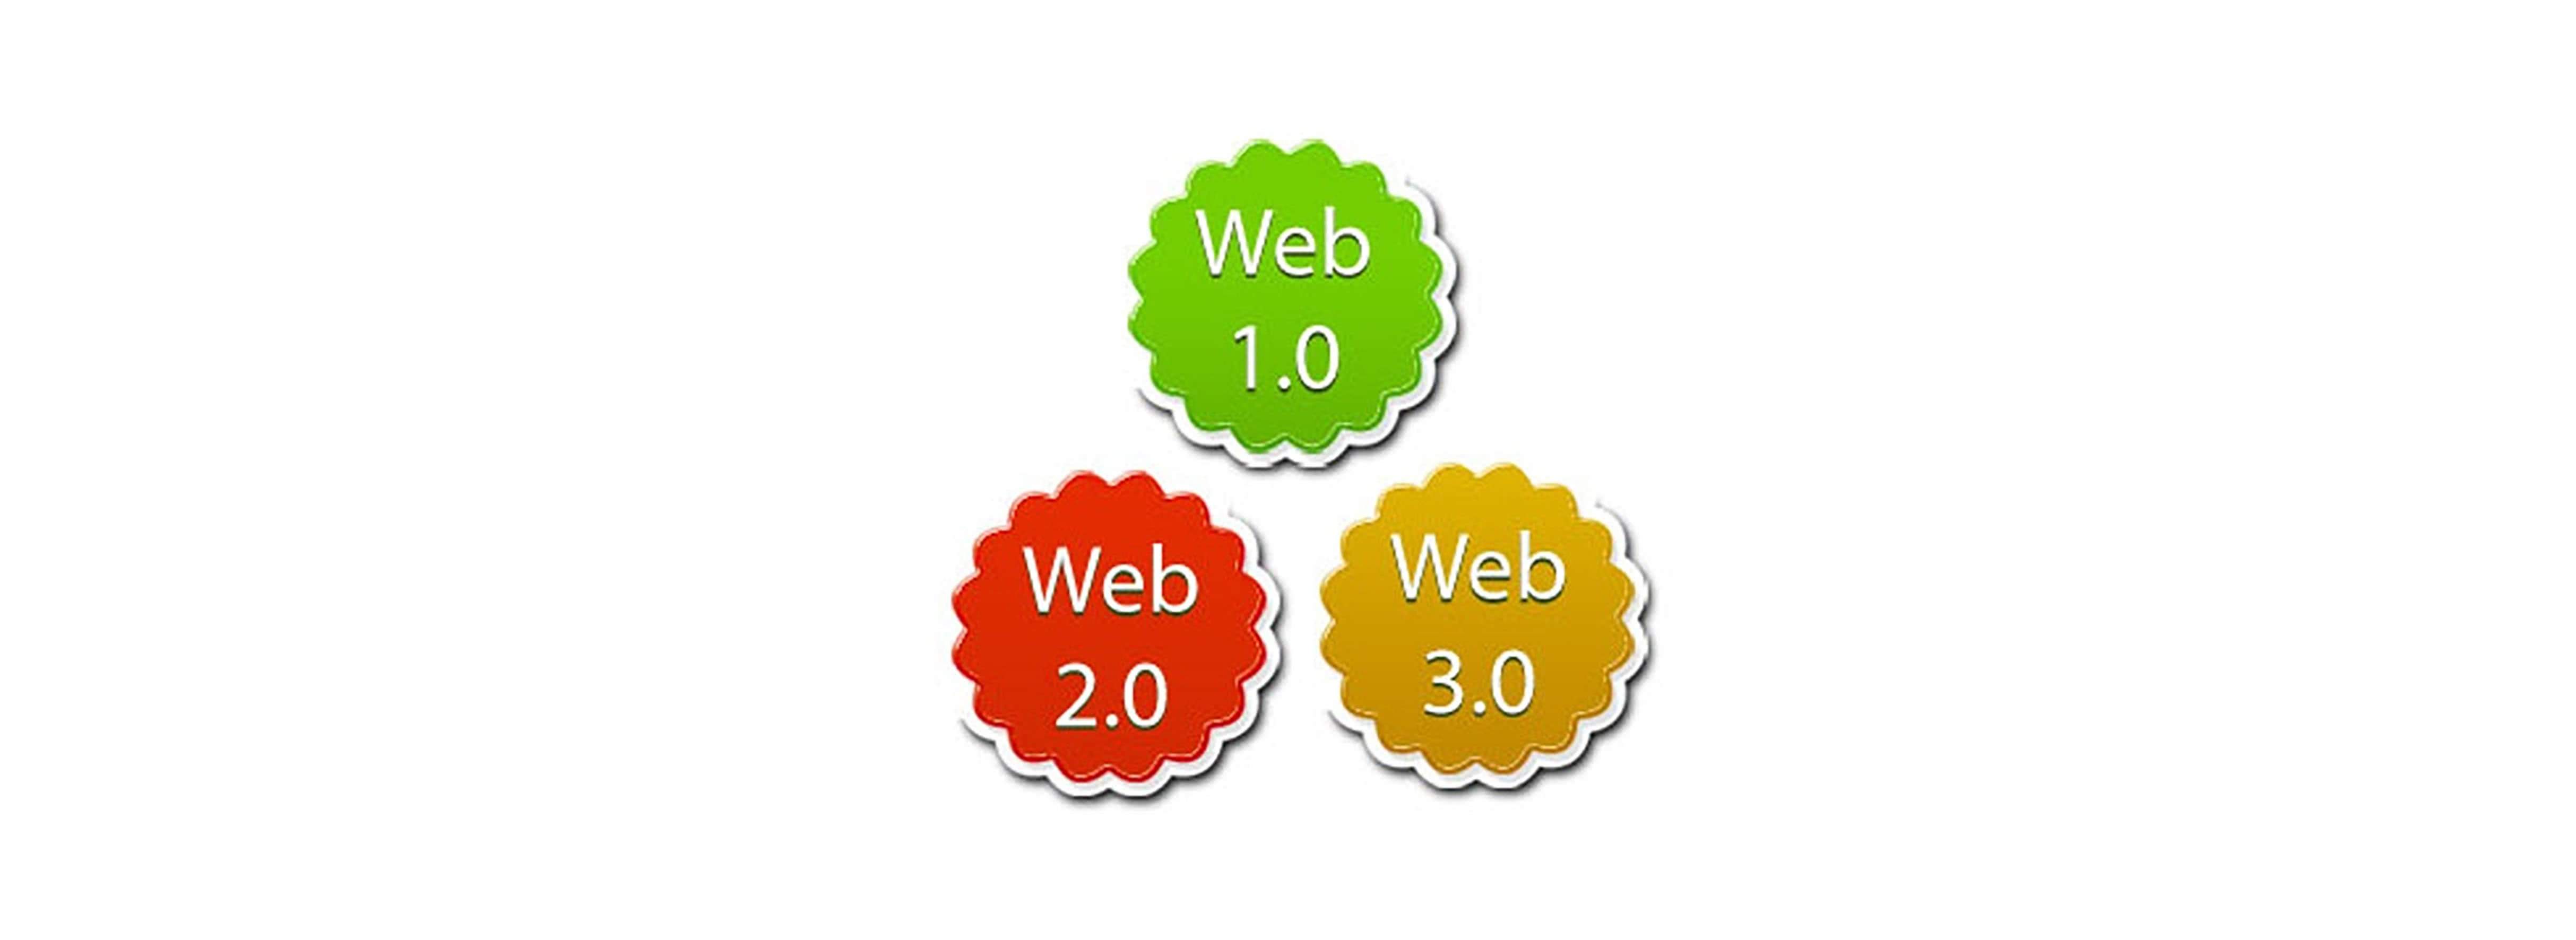 100.000 3. Технологии web 2.0. Технология web 3.0. Web 2 web 3. Web 1.0 web 2.0 web 3.0.